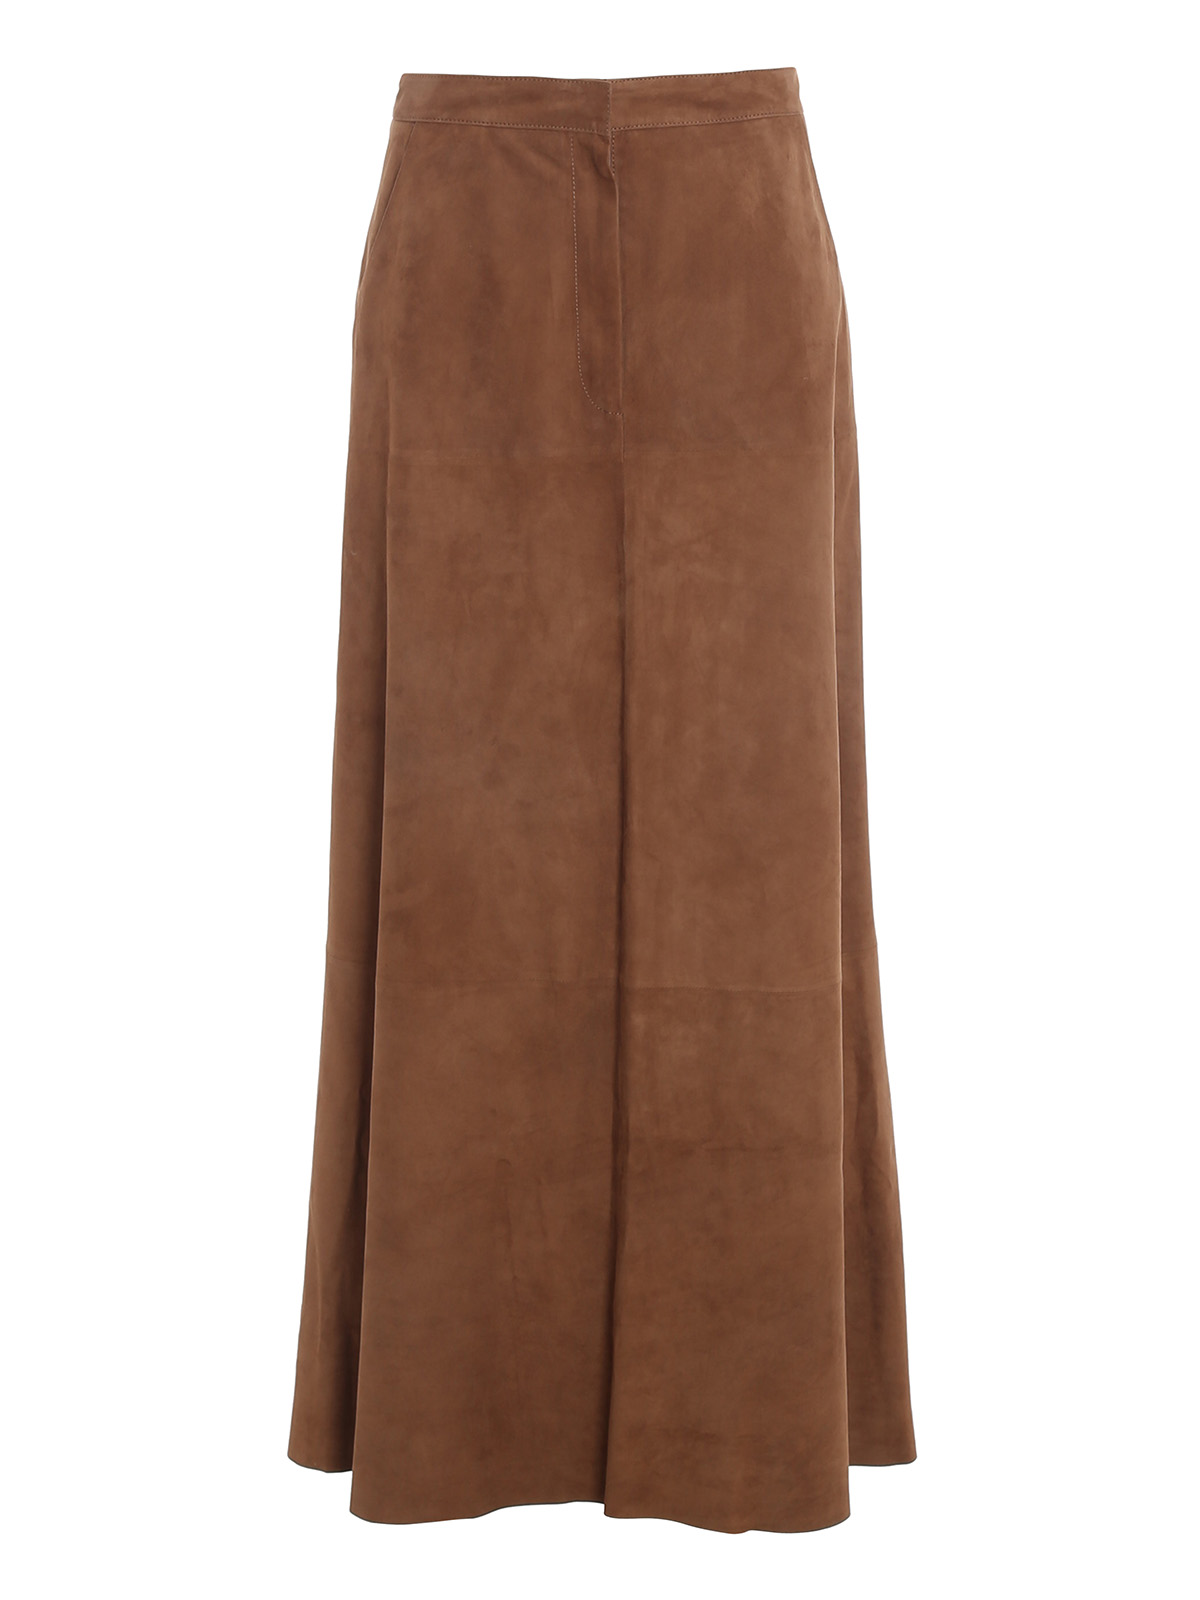 Leather skirts Desa 1972 - Suede maxi skirt - K12687CARAMEL | iKRIX.com